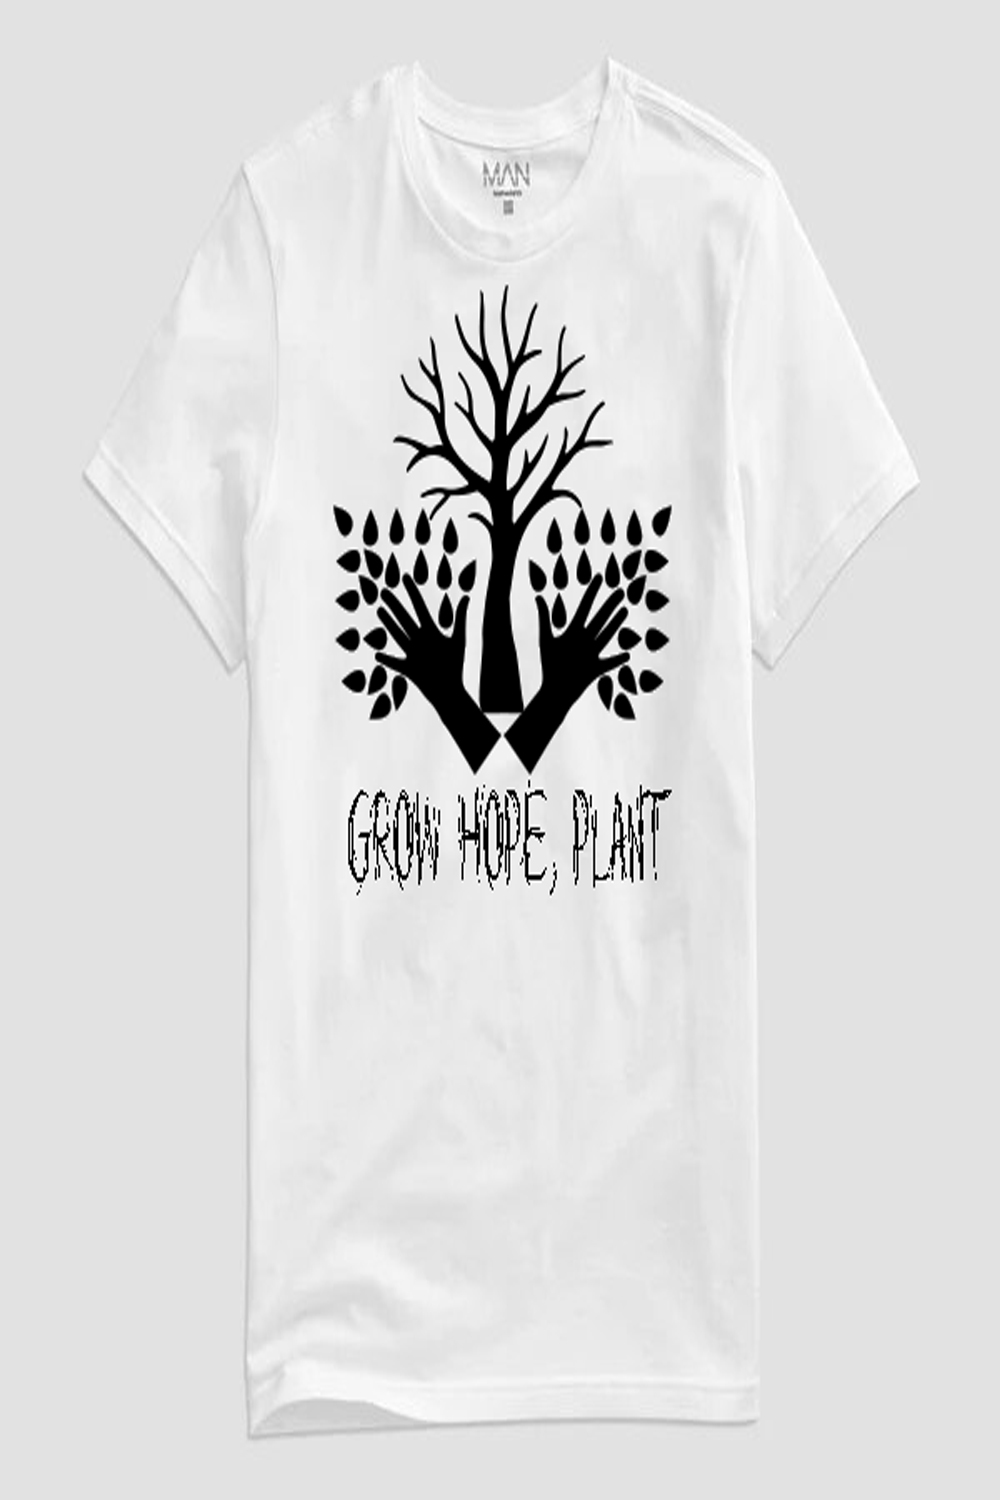 Grow Hope Plant - TShirt Print Design pinterest preview image.